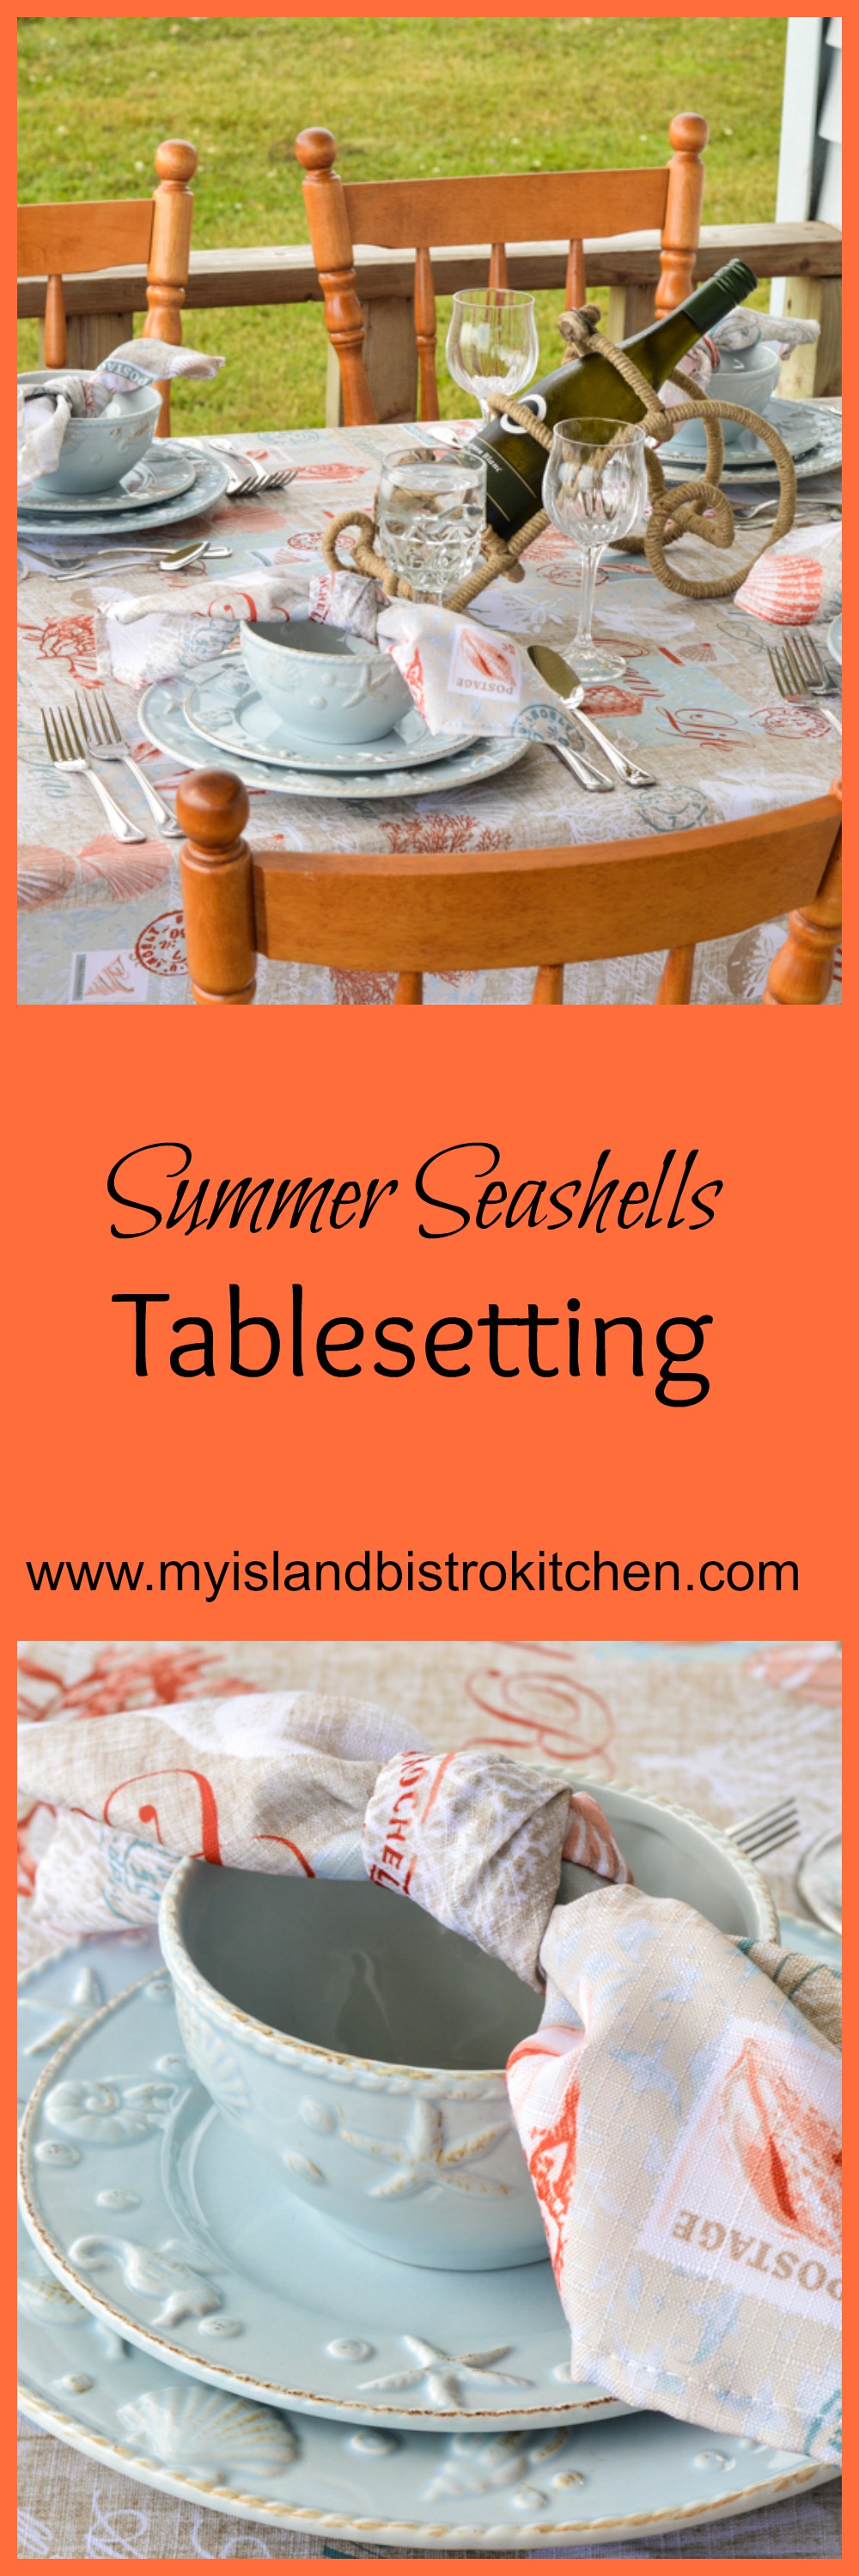 Summer Seashells Tablesetting